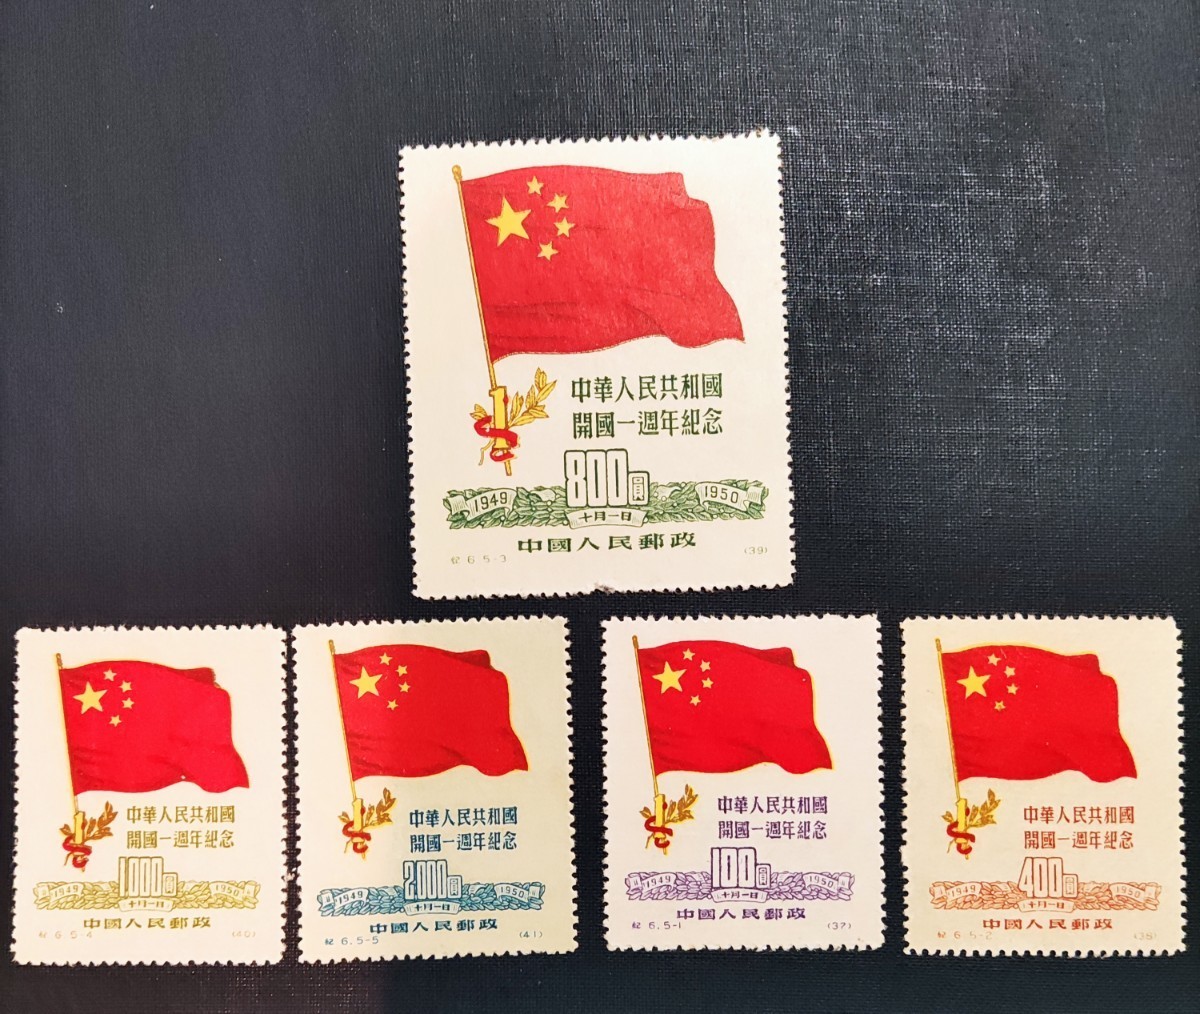 ヤフオク! -「中華人民共和国開国記念切手」の落札相場・落札価格